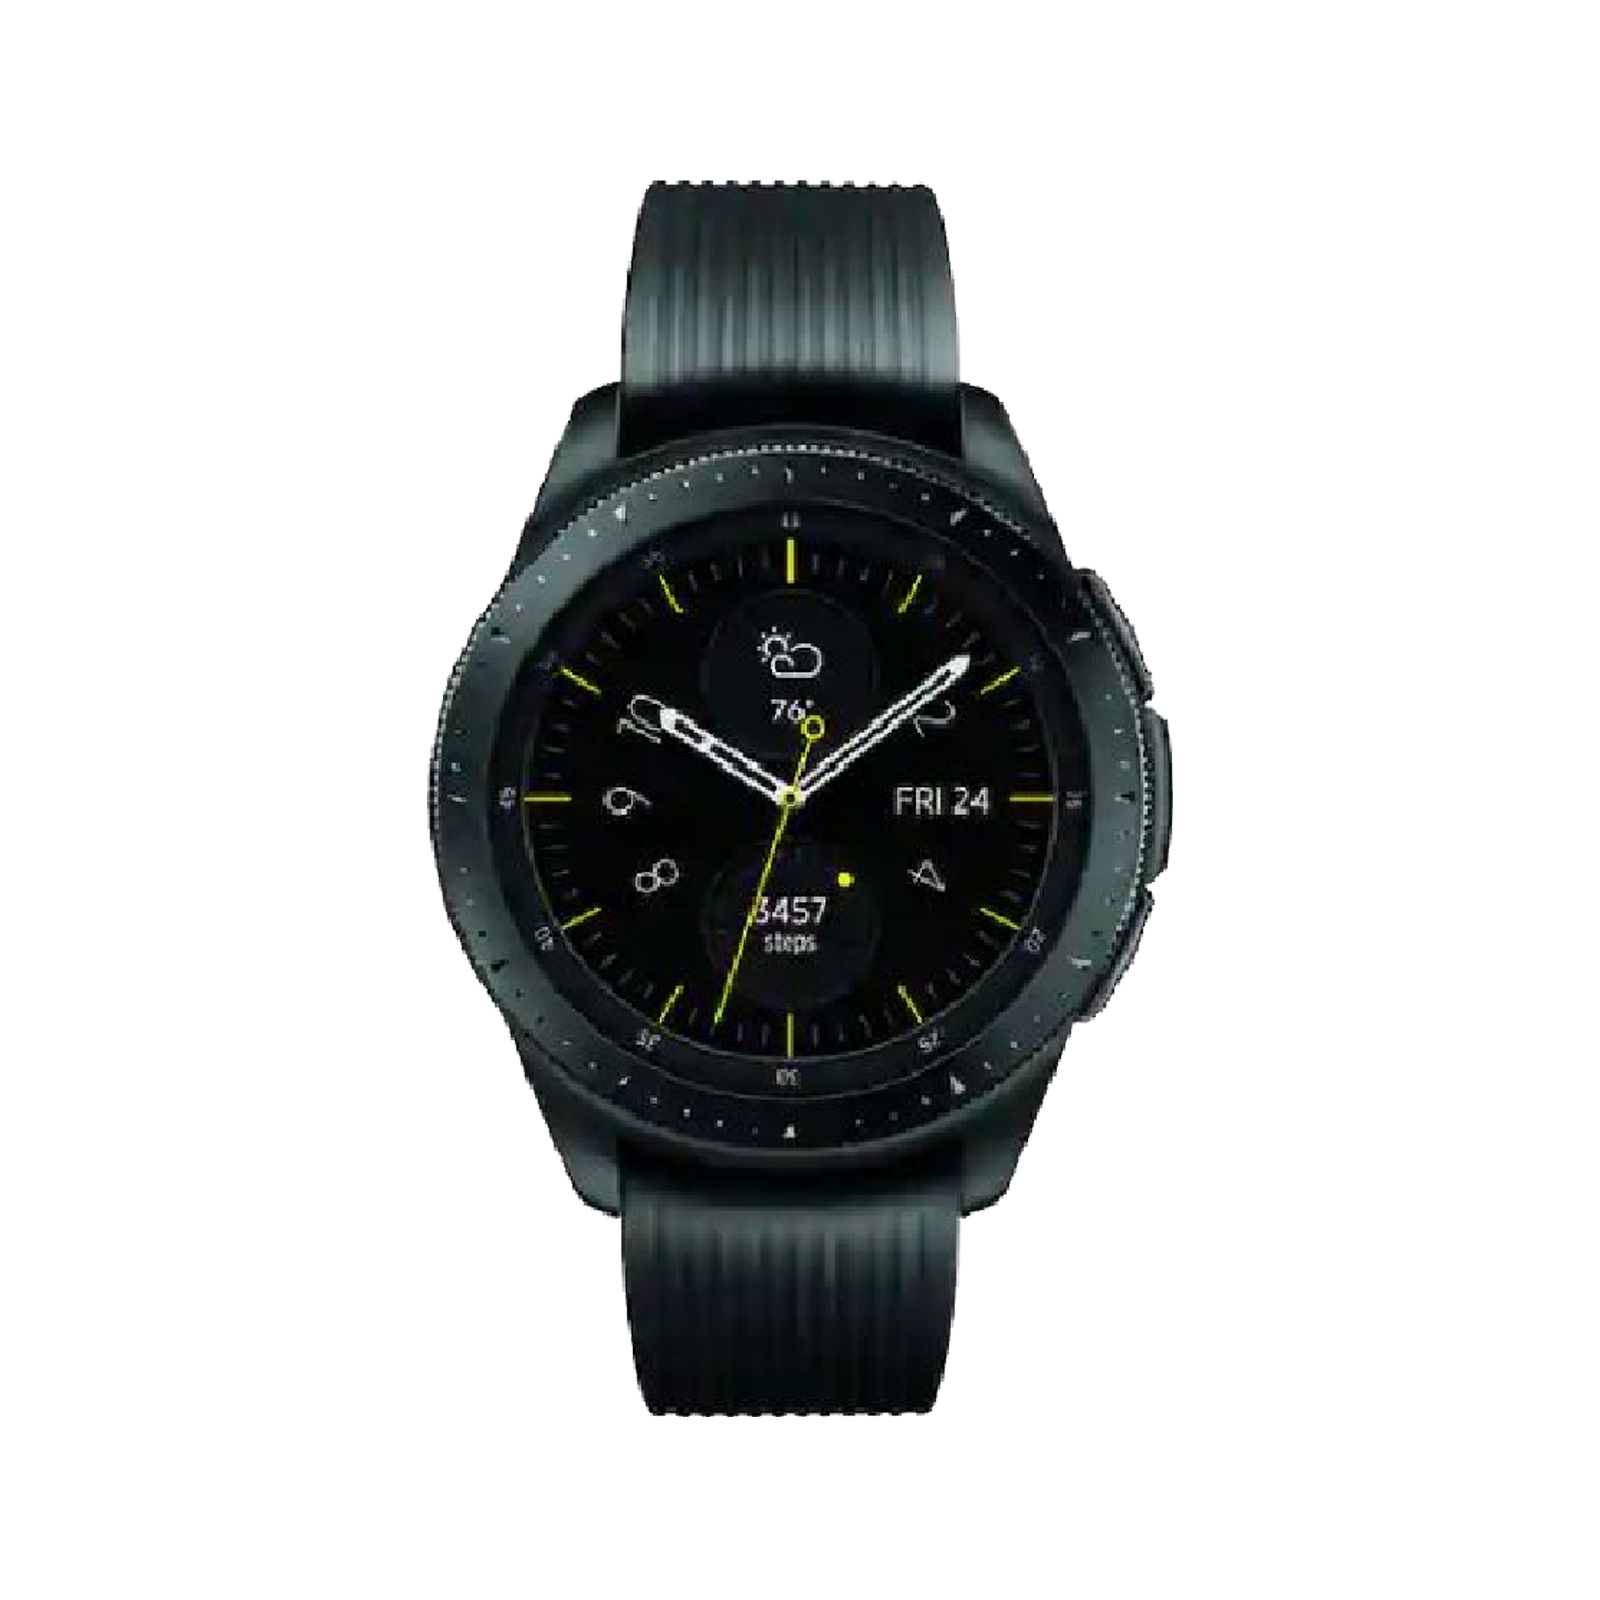 Samsung Galaxy Watch [42mm] [Black] [Brand New] [24M]